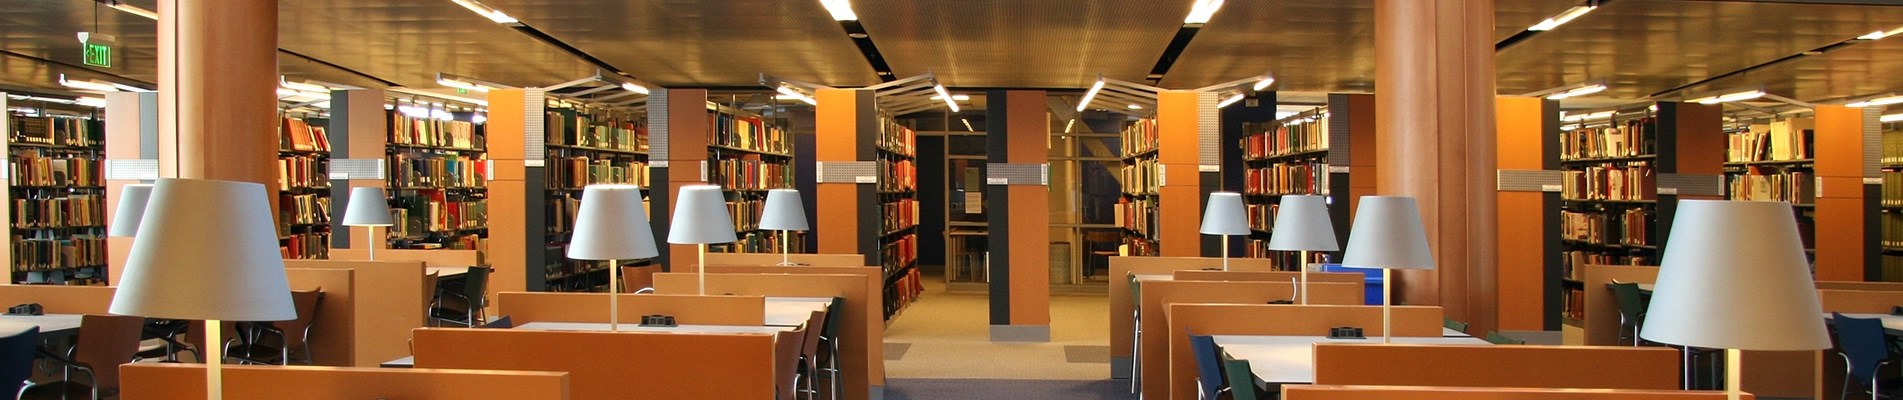 University Library Windows 1903